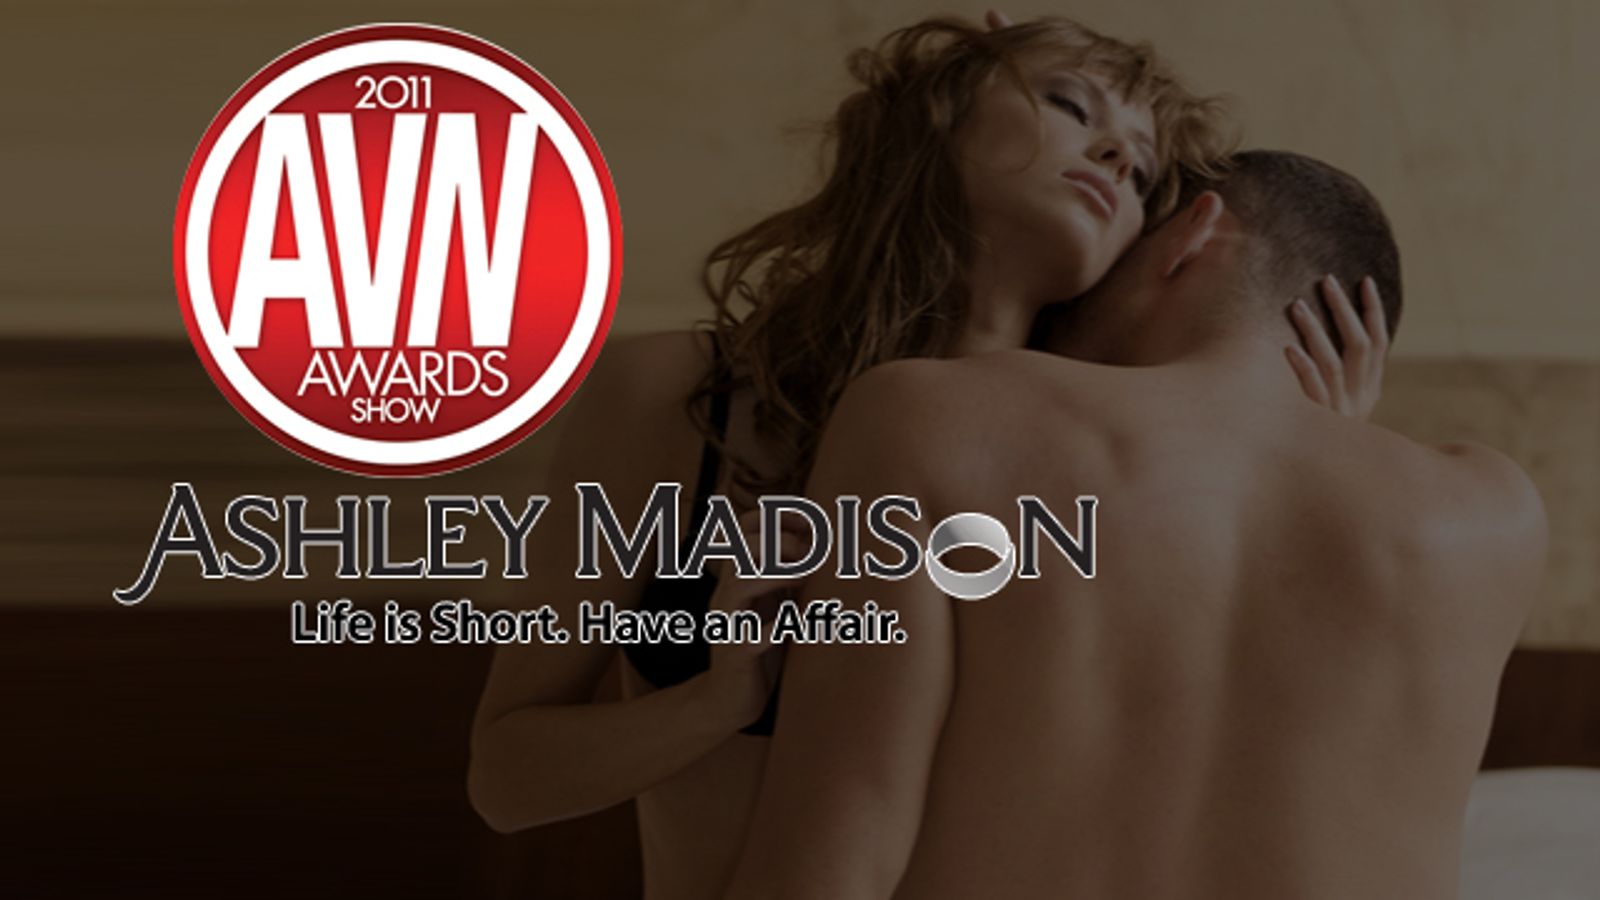 AshleyMadison.com Named Corporate Sponsor of AVN Awards